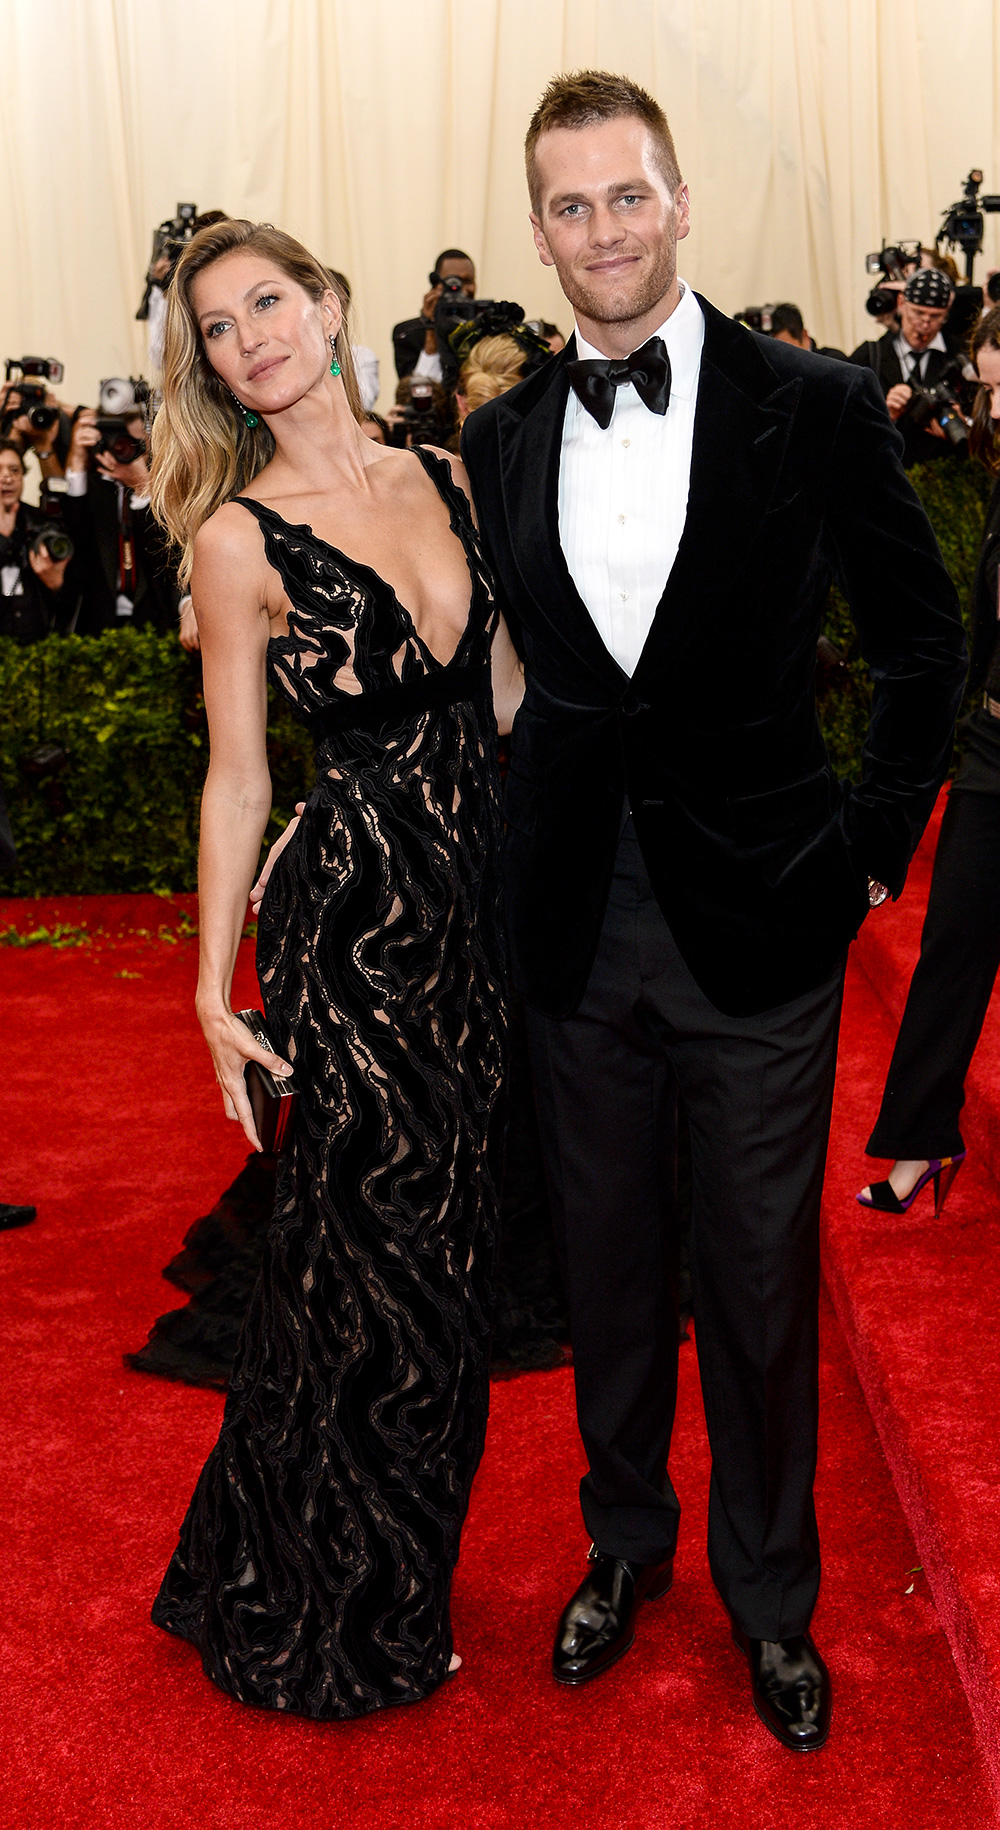 Tom Bradys Wife Supermodel Gisele Bundchen To Star In Sexiest Opening Ceremony Ever